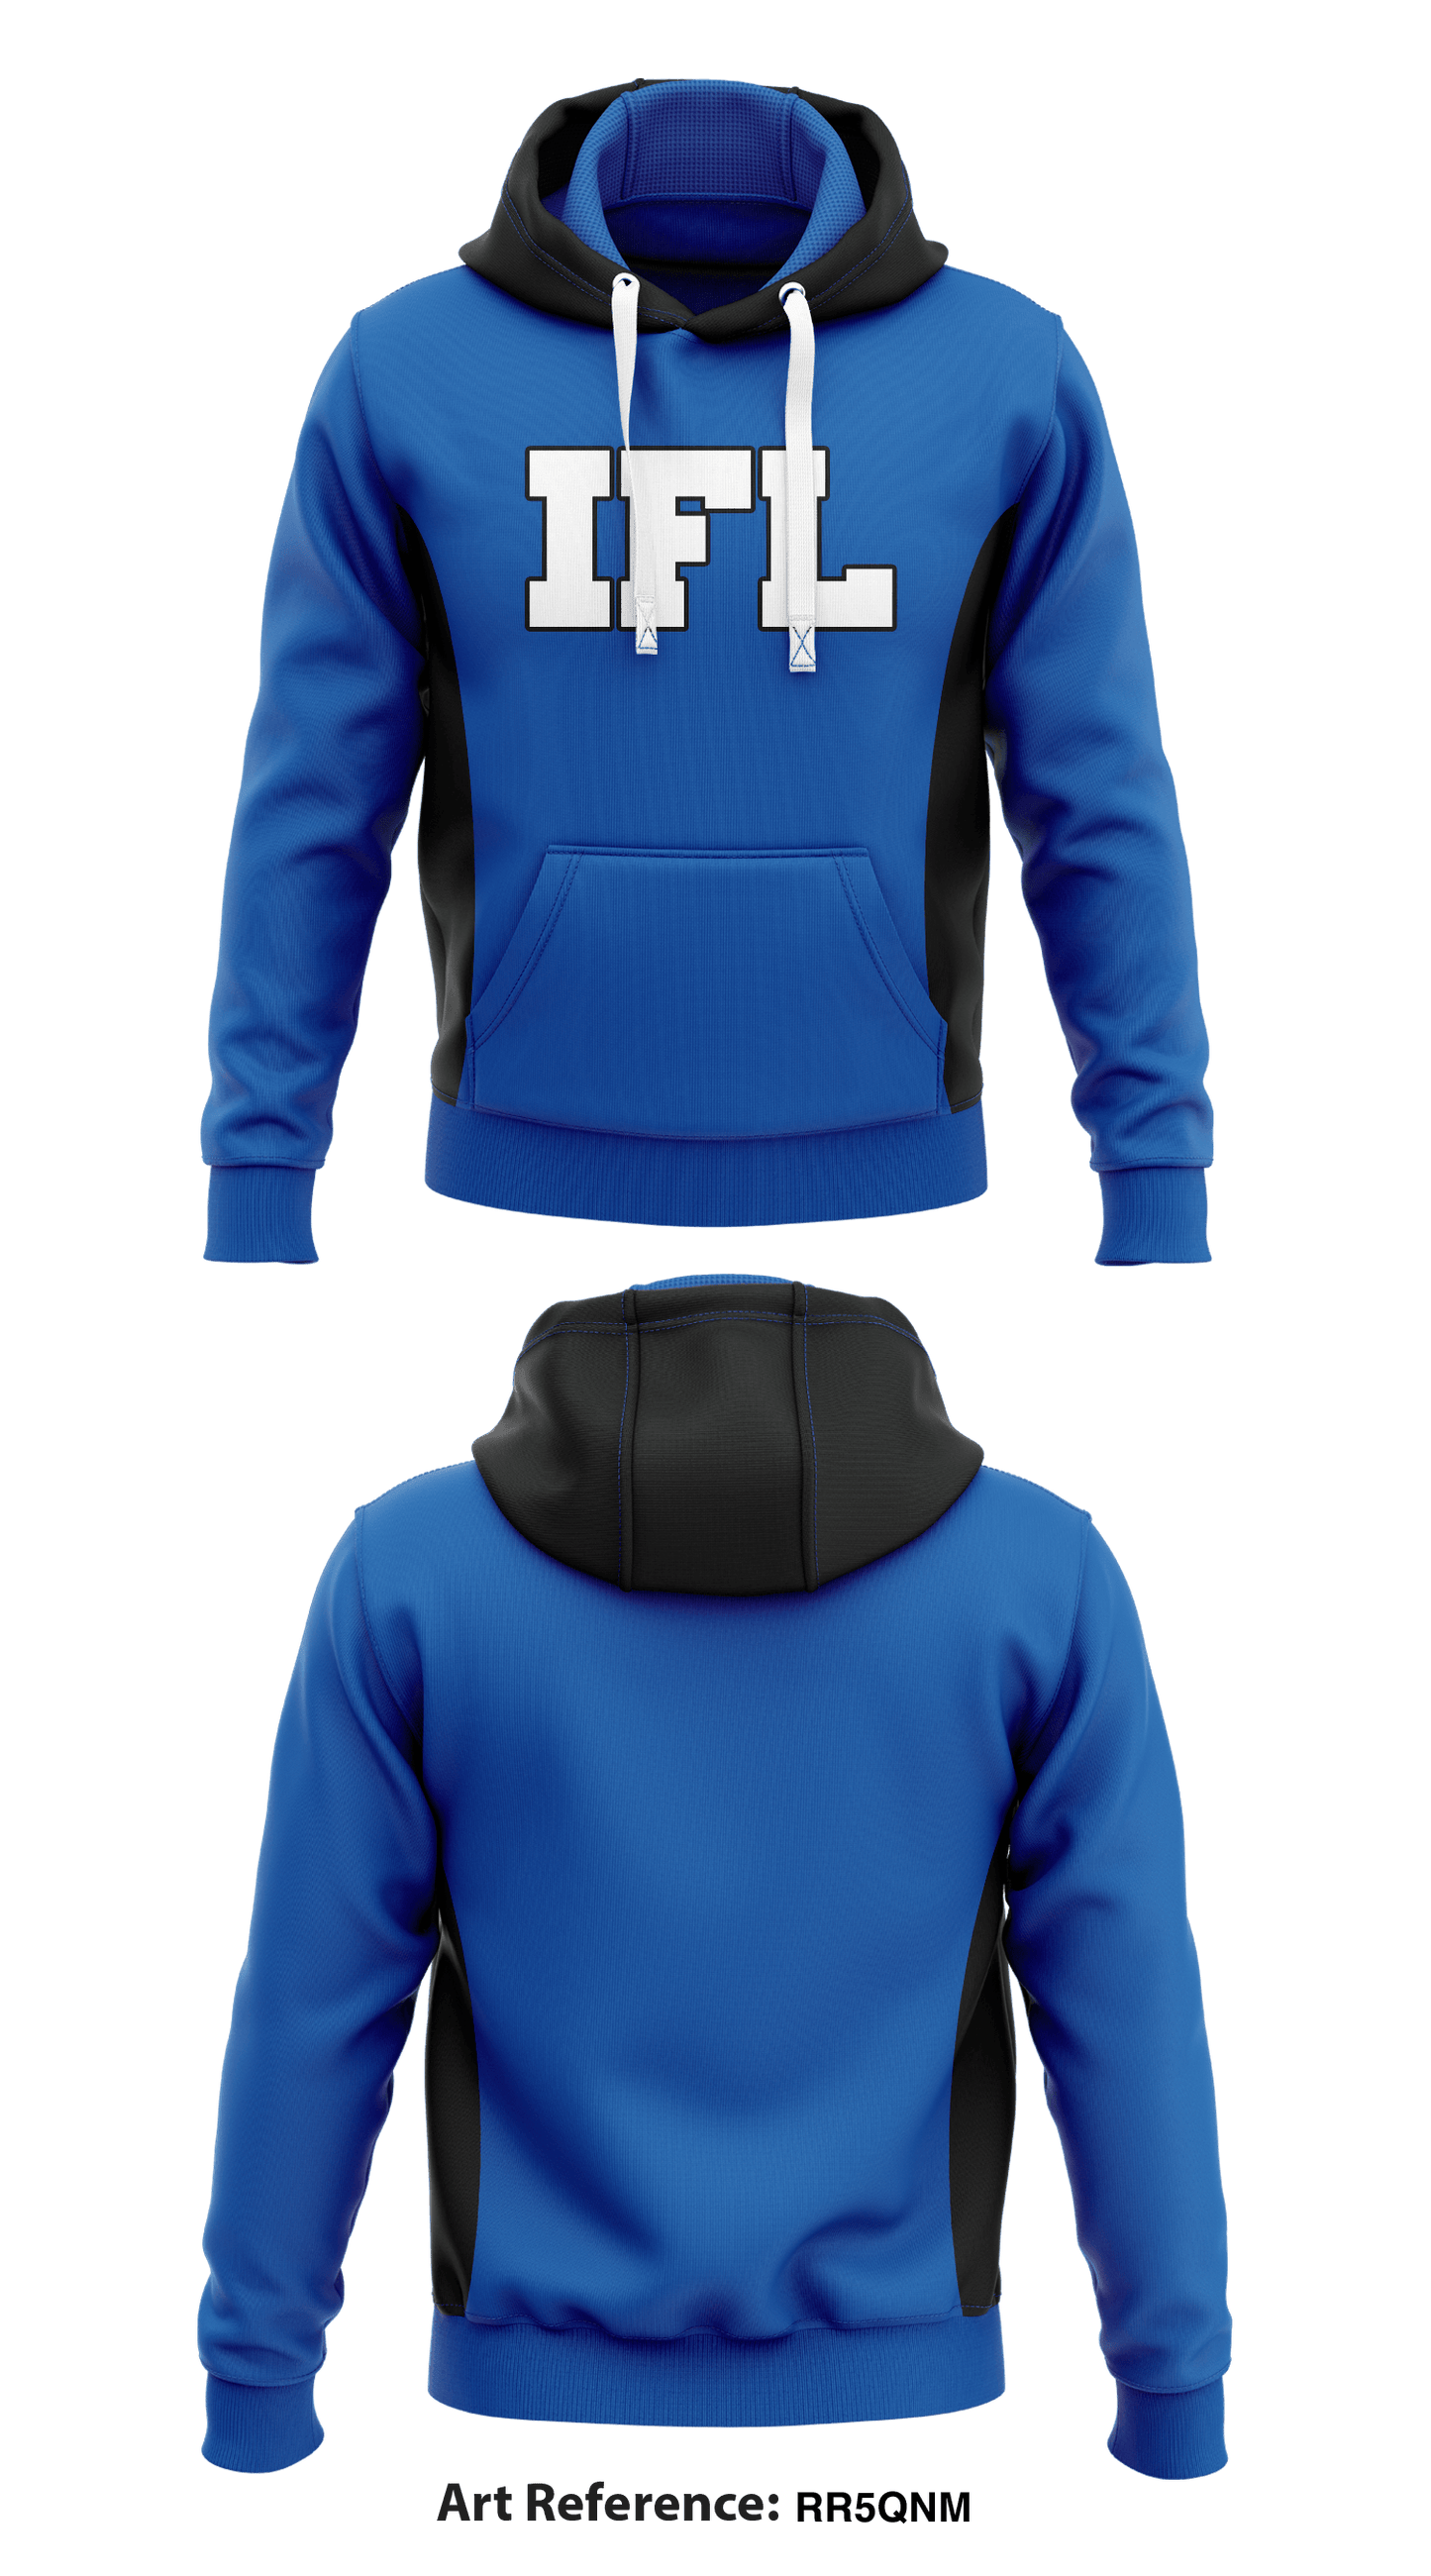 IFL Store 1 Core Men's Hooded Performance Sweatshirt - rR5qNM